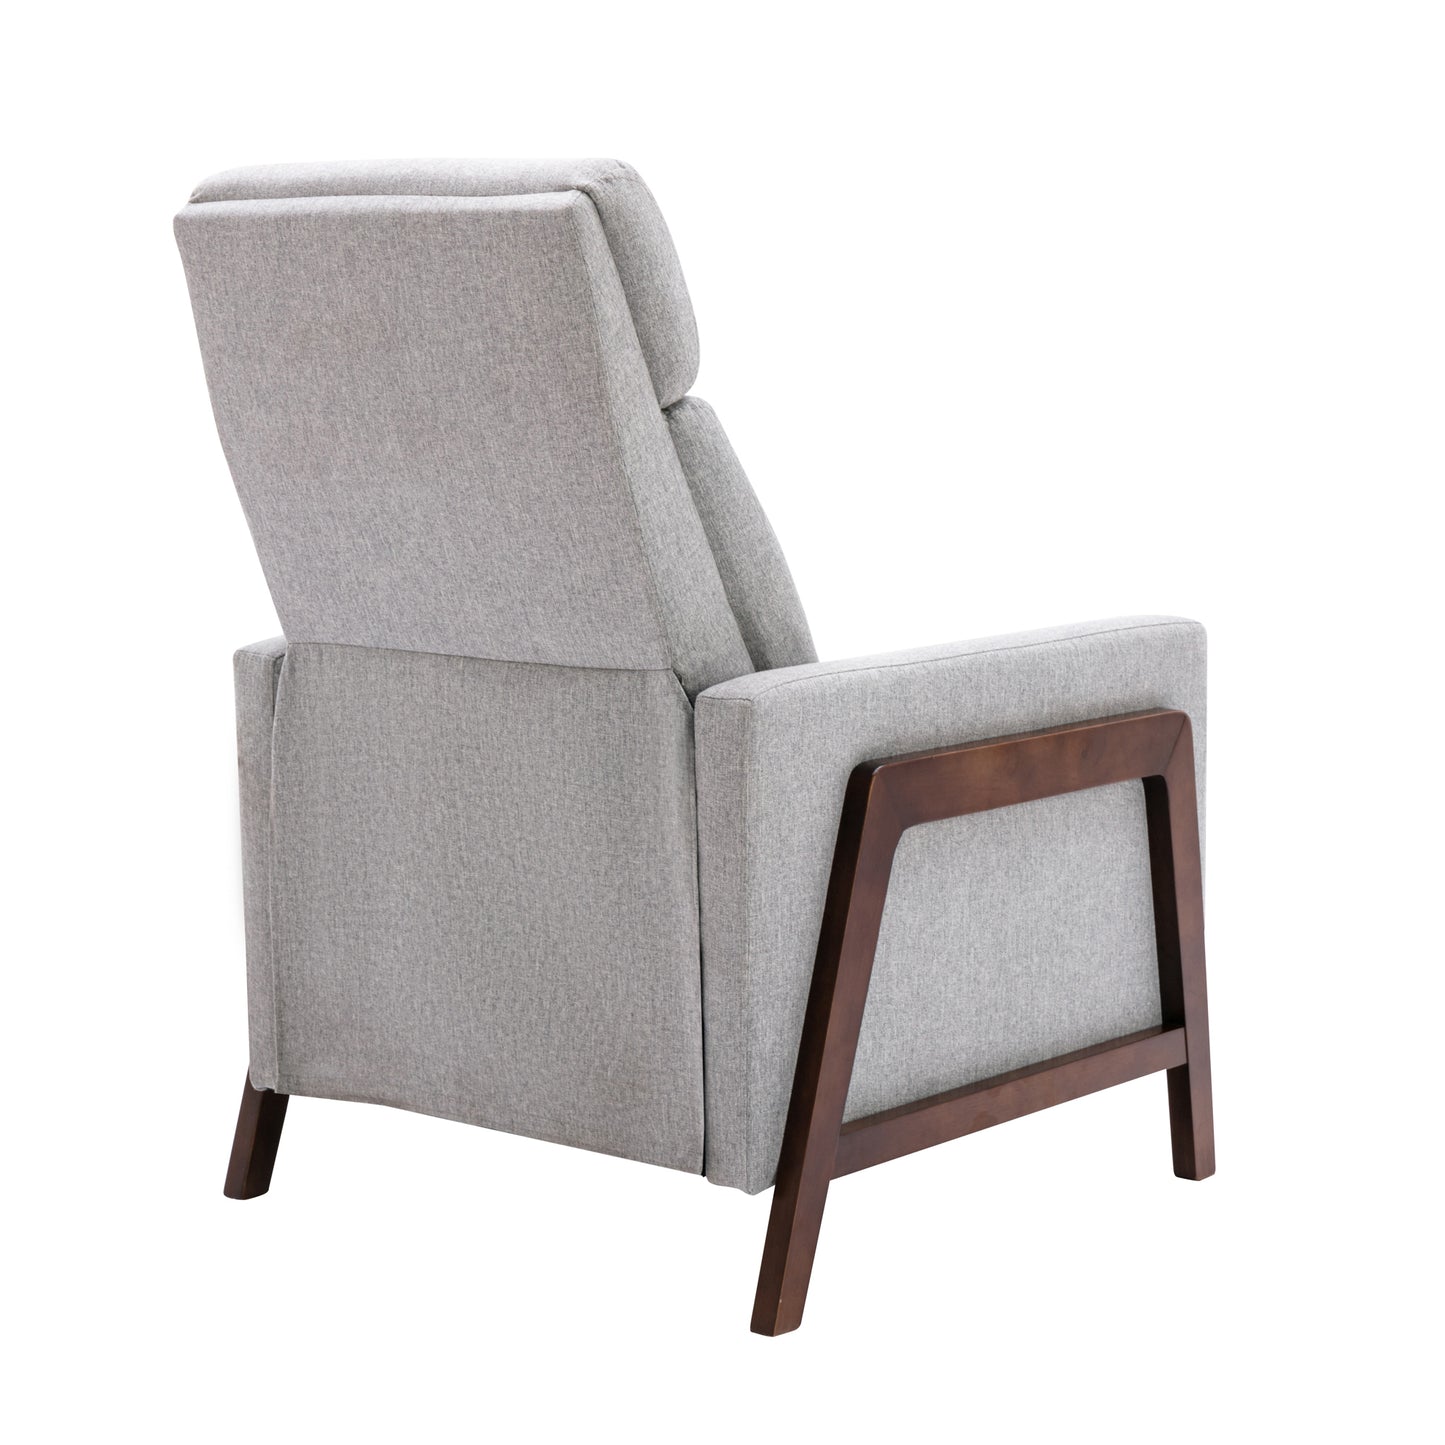 Solid Ash Wood-Framed Upholstered Recliner Chair Adjustable，Gray